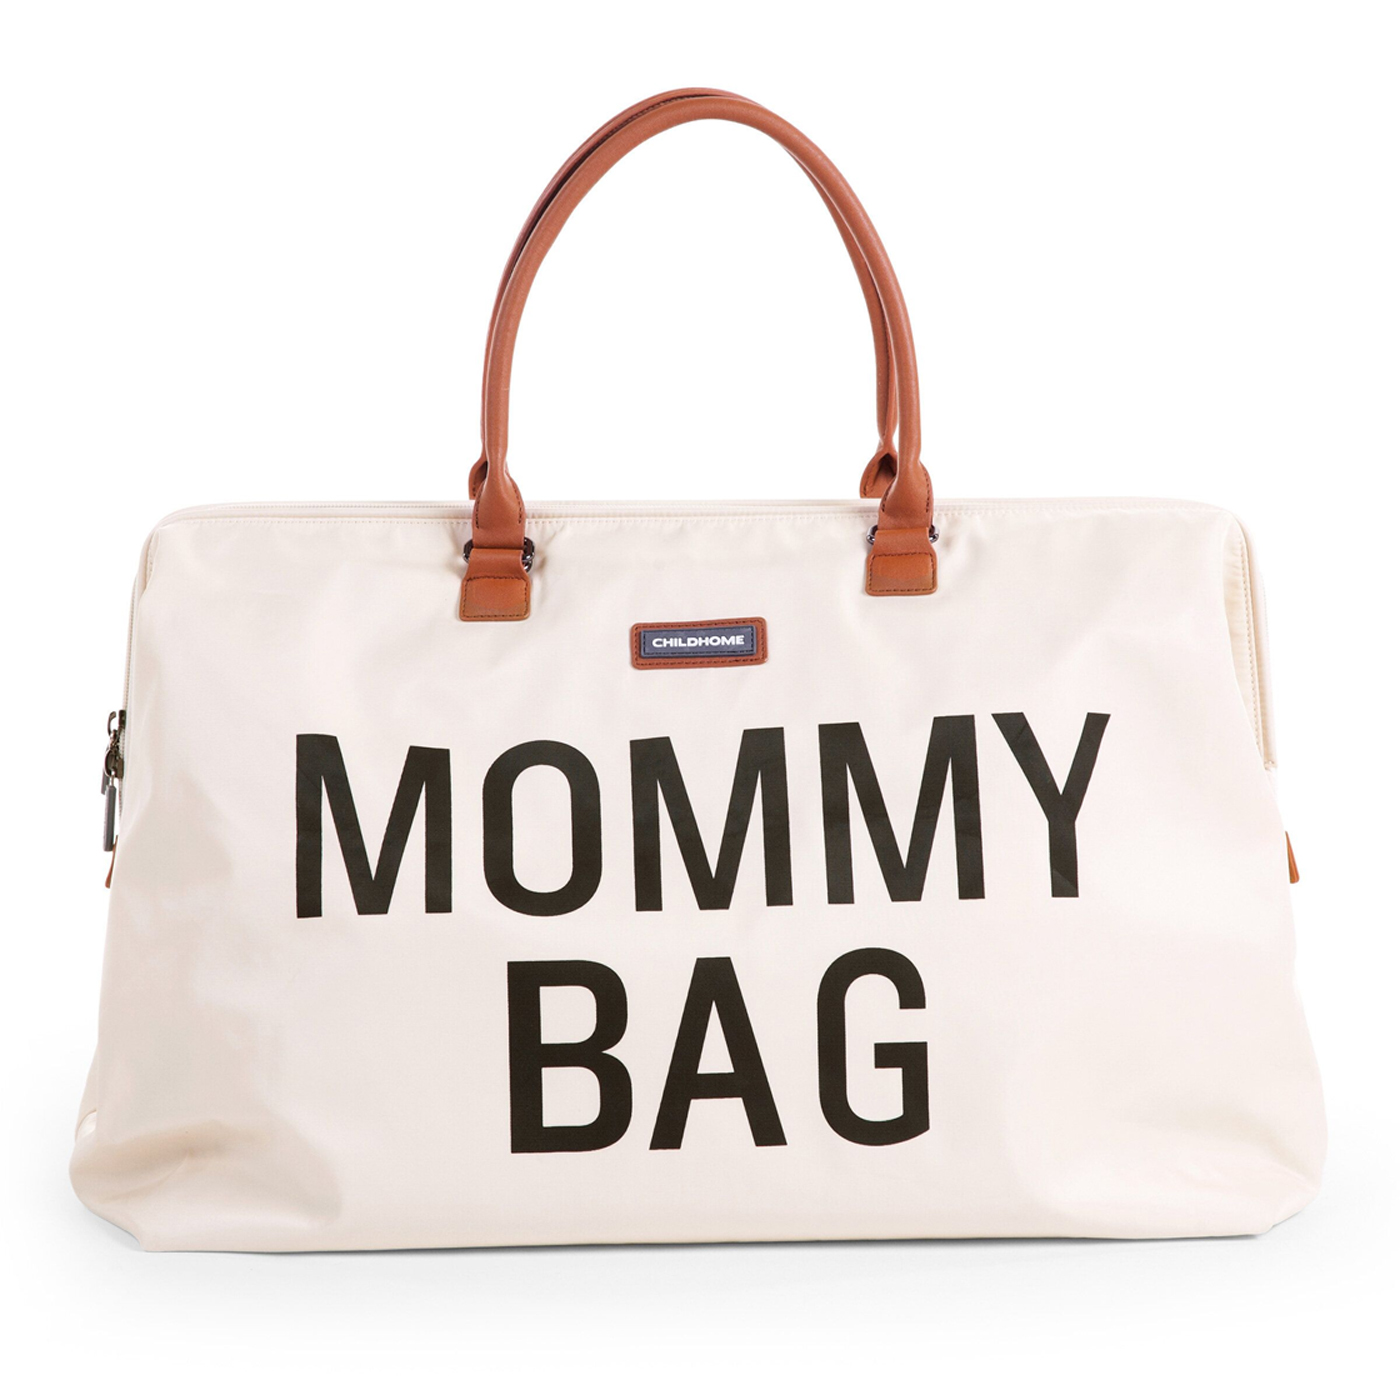  Childhome Mommy Bag Anne Bebek Çantası | Krem